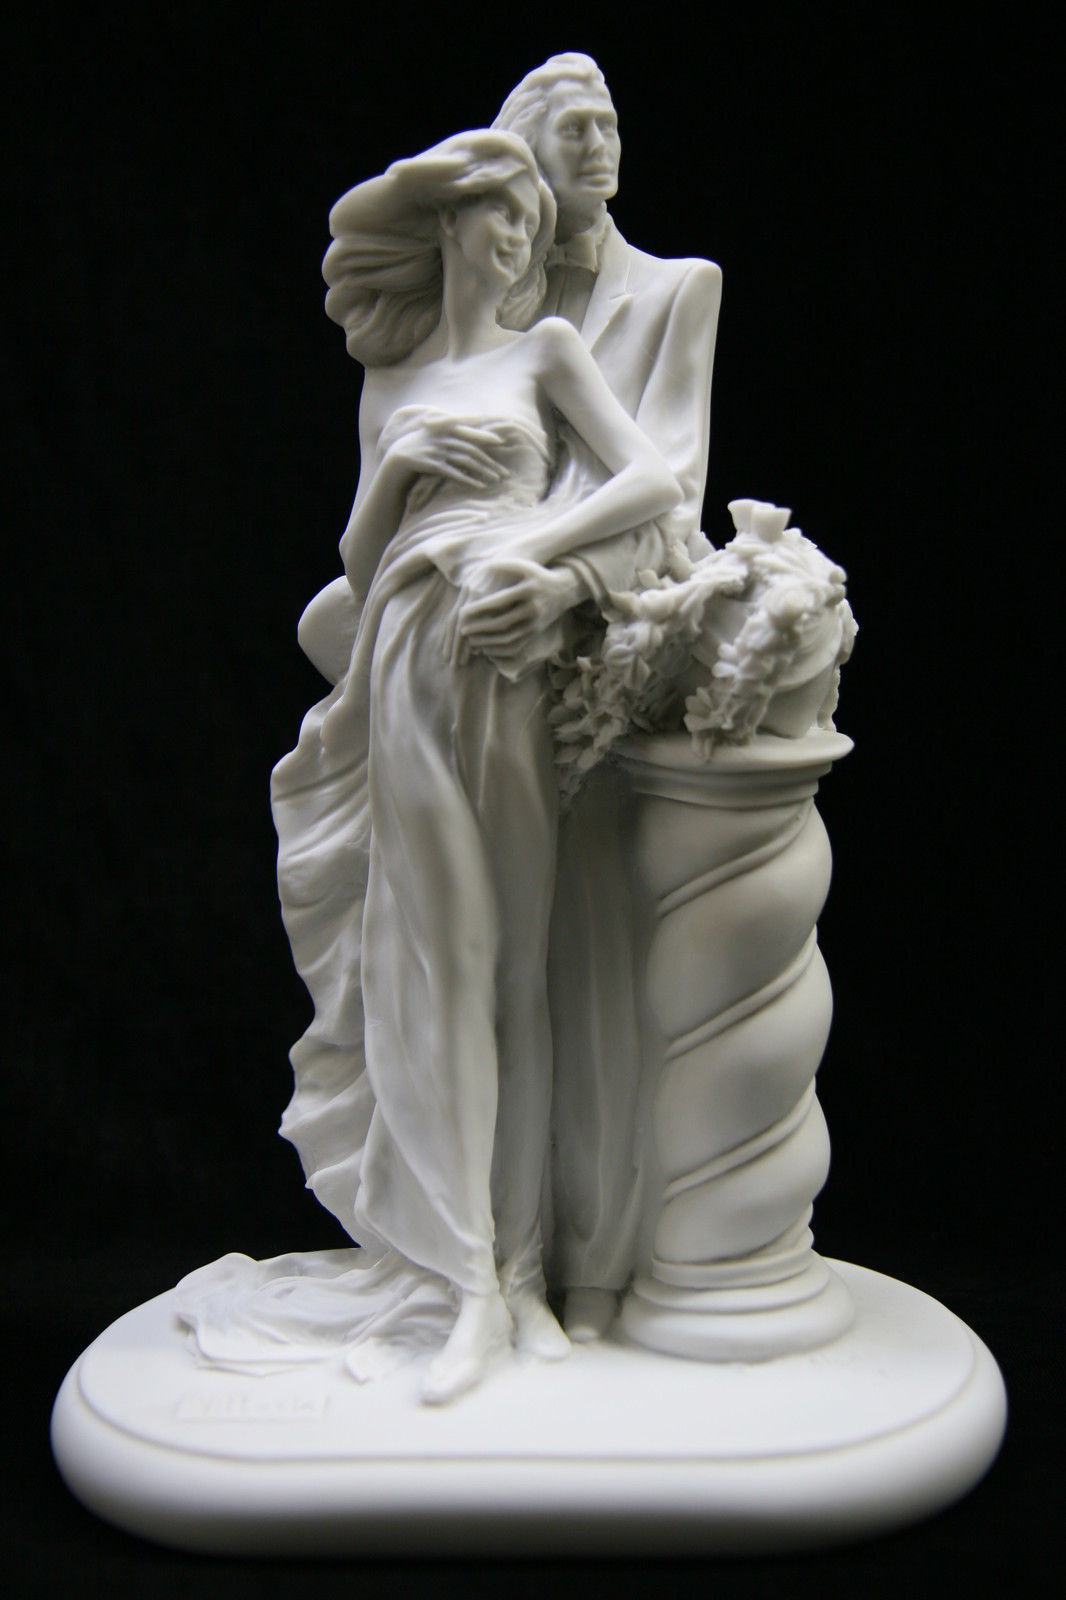 Romantic Couple of Lovers Italian Statue Figurine Figure Vittoria Made in Italy - $59.95